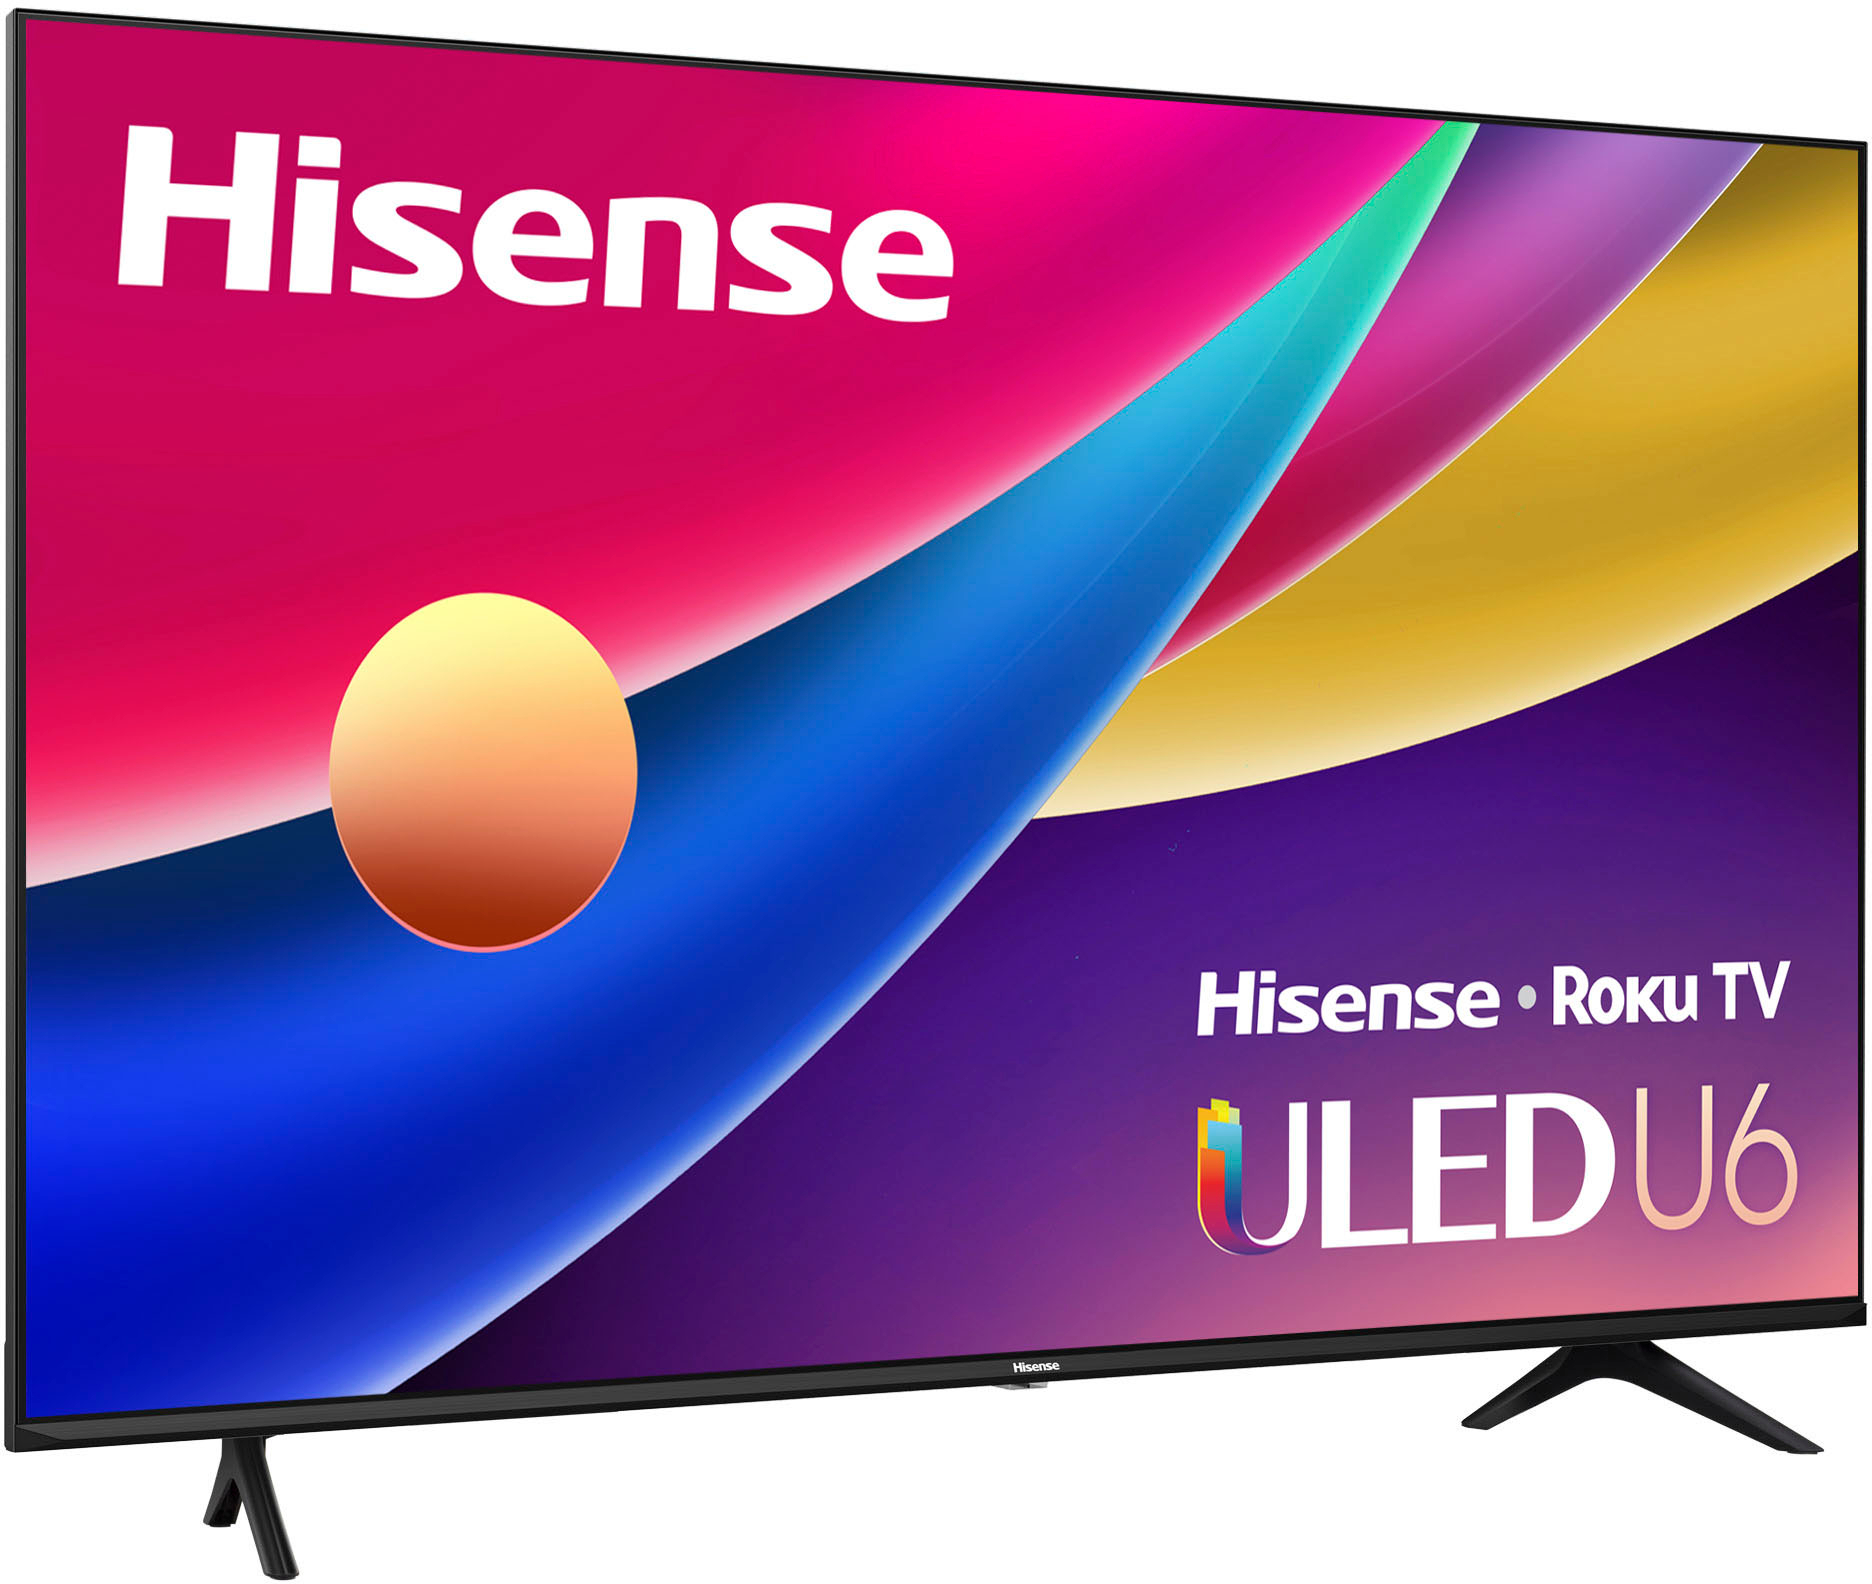 Hisense ULED TVs, Shop Online Now